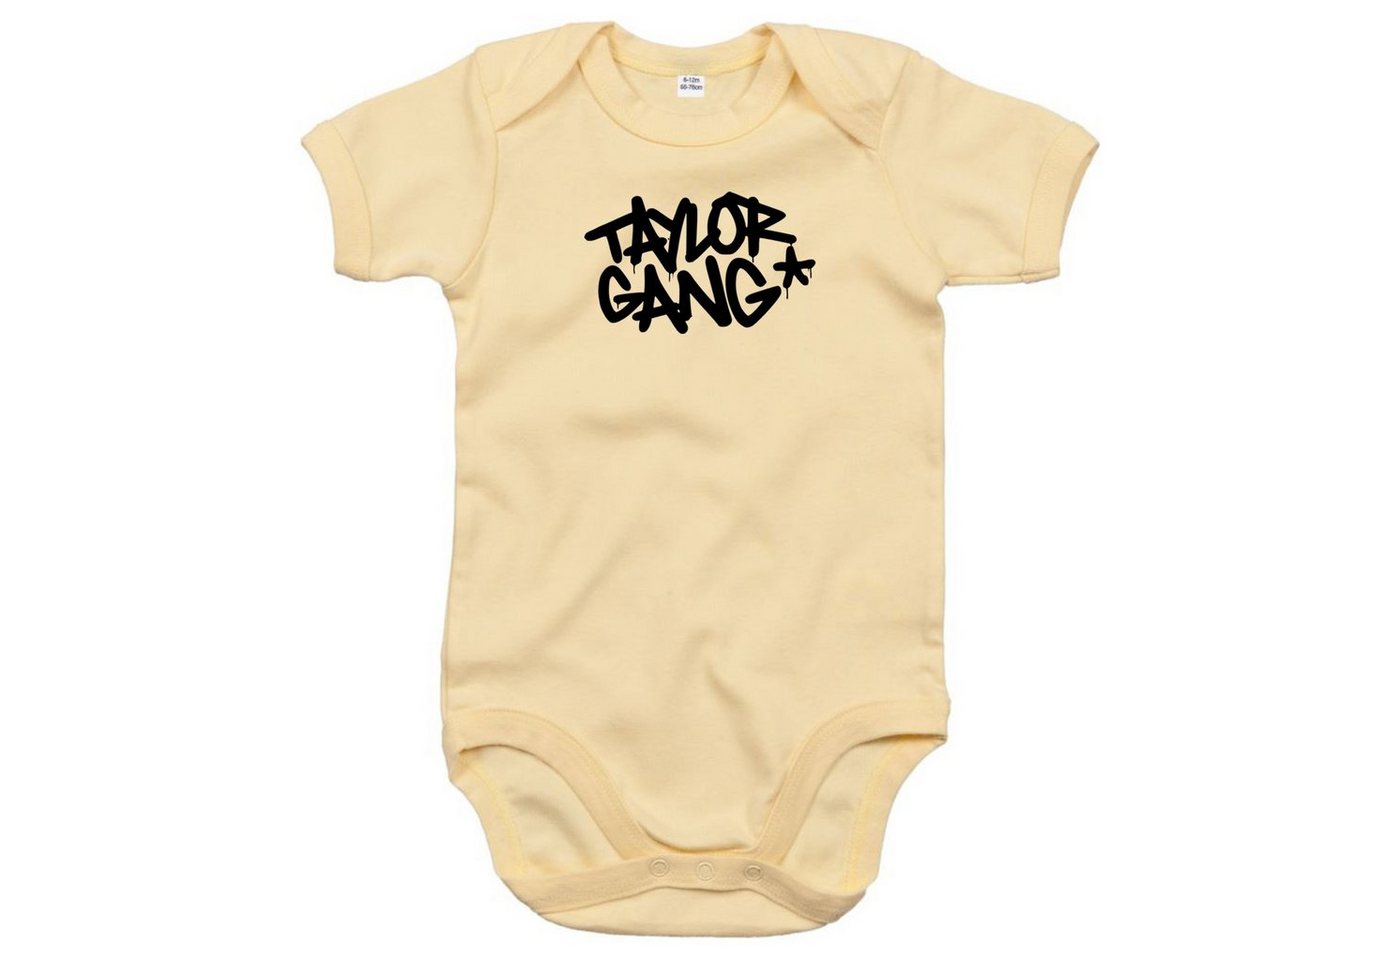 Blondie & Brownie Strampler Baby Strampler Body Shirt Taylor Gang Stern Wiz Rapper Khalifa von Blondie & Brownie